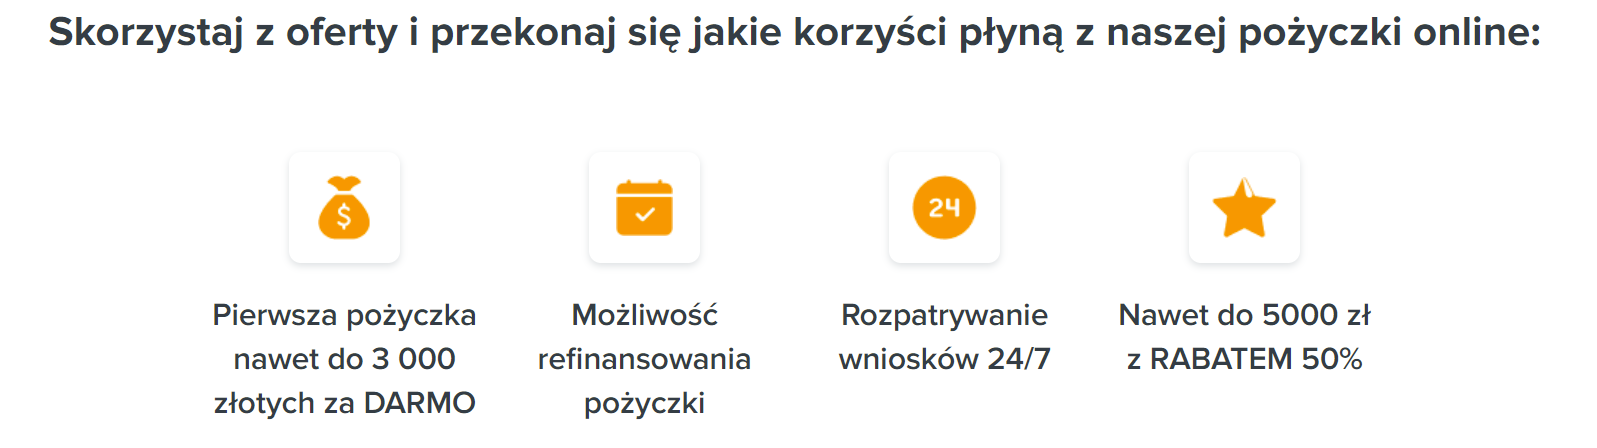 Fot. Screen / pozyczkaplus.pl